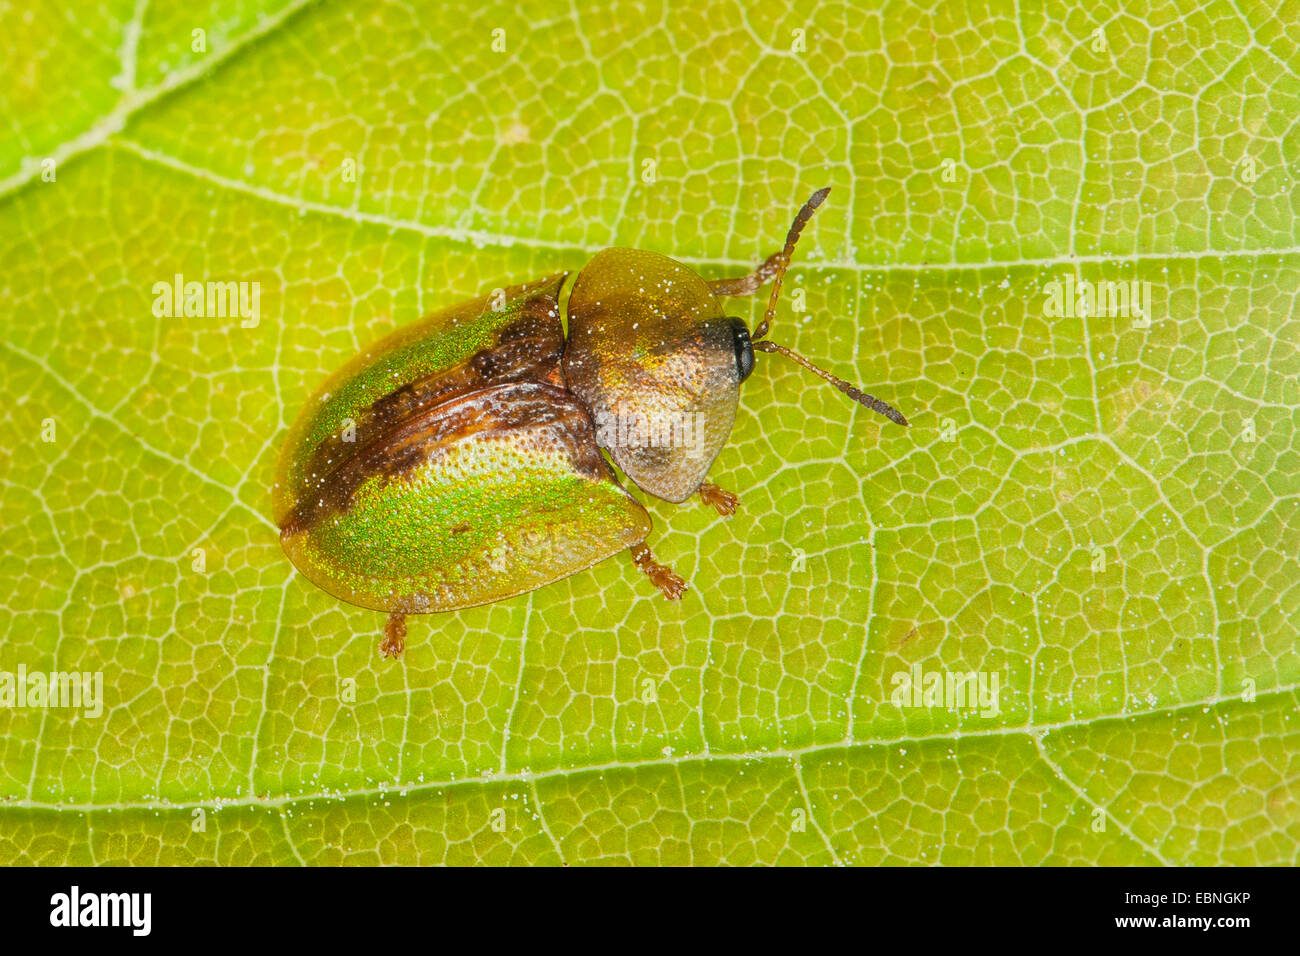 Tortoise beetle, Shield beetle (Cassida vibex oder Cassida bergeali), sitting on a leaf, Germany Stock Photo